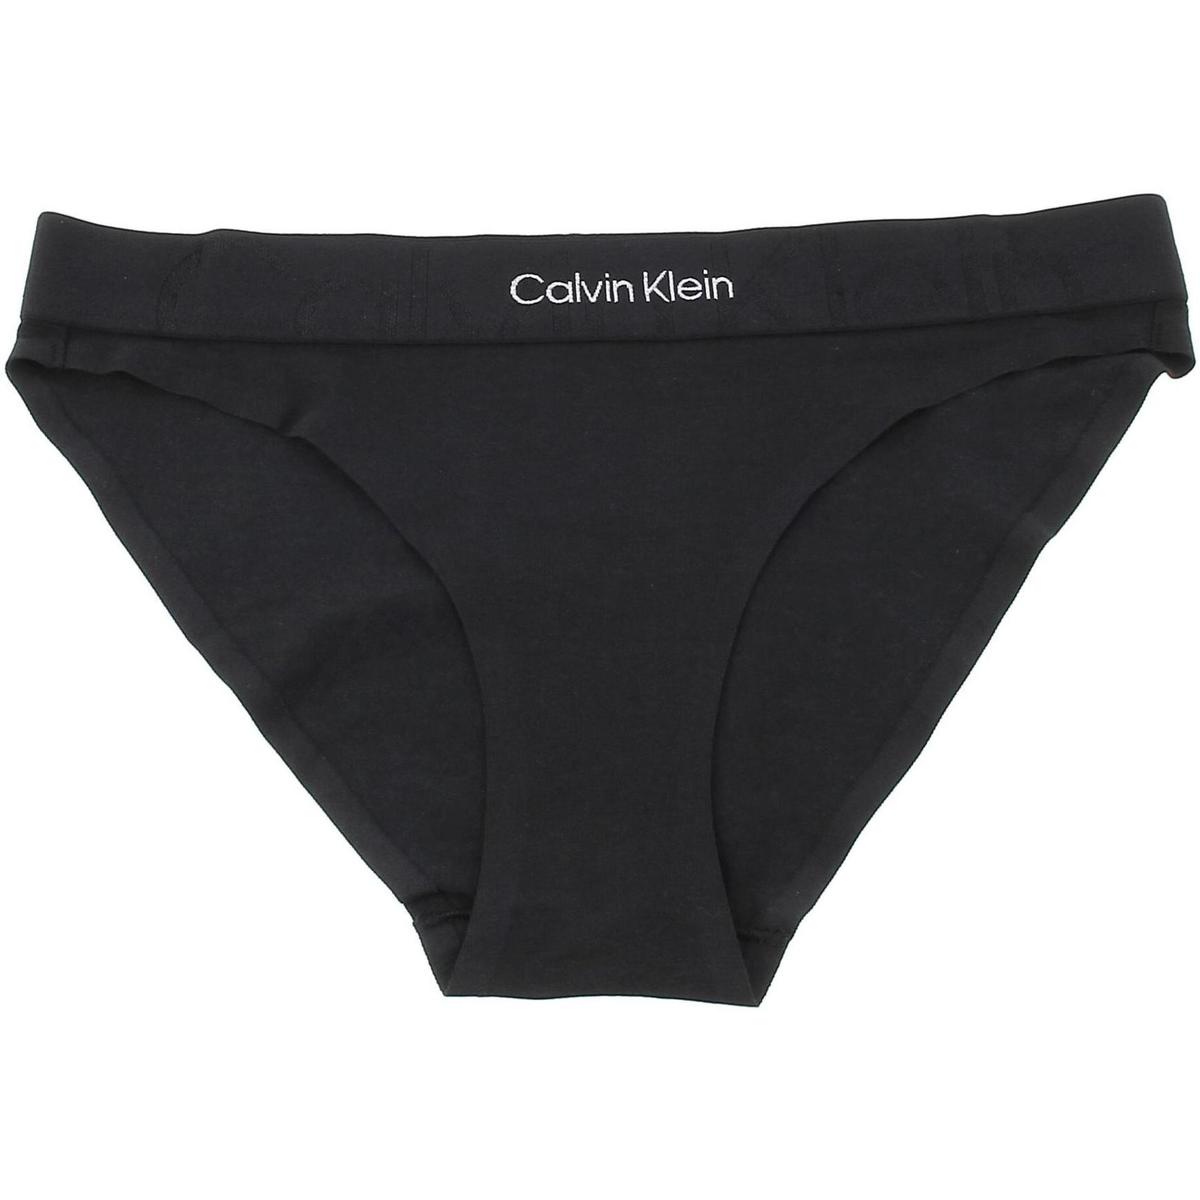 Sous-vêtements Femme Calvin Klein Babyblå BH med let for og dyb udskæring Bikini black l Noir